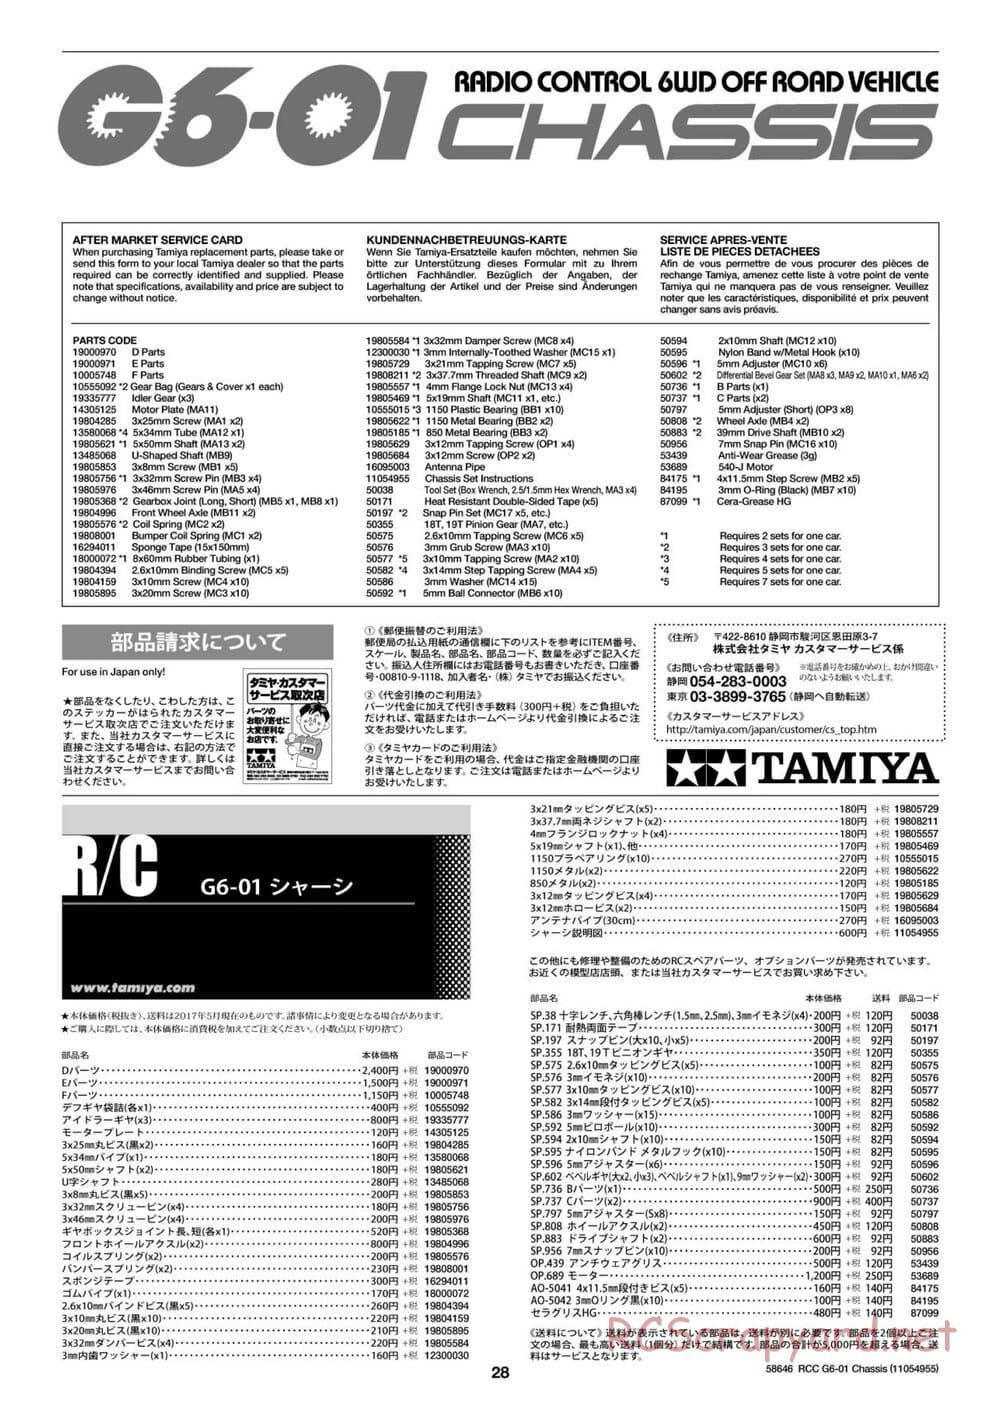 Tamiya - Konghead 6x6 - G6-01 Chassis - Manual - Page 28